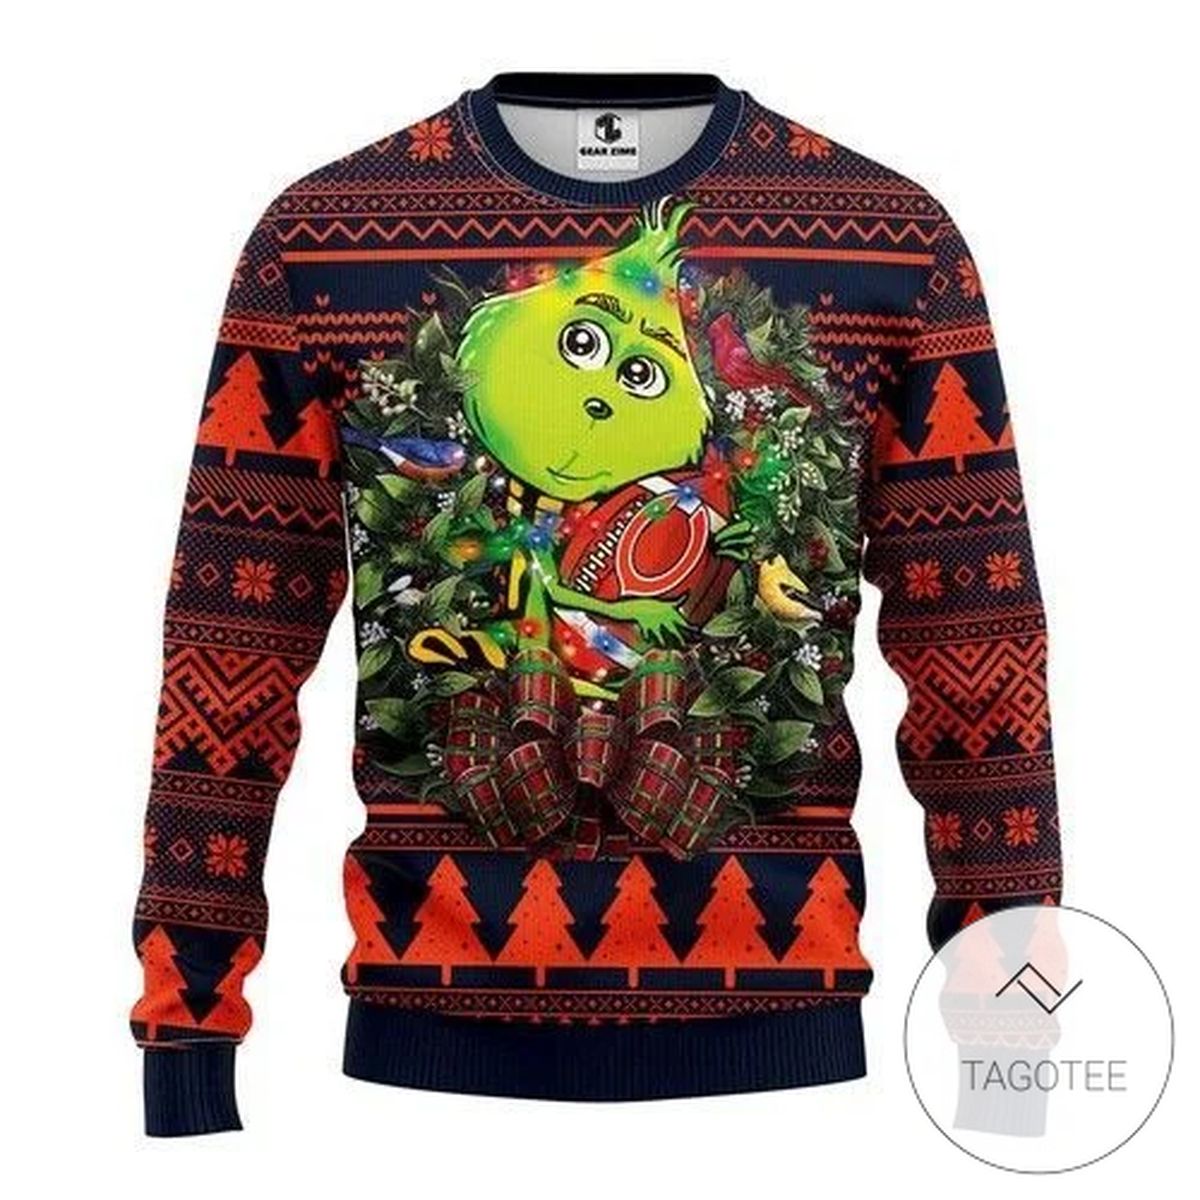 Chicago Bears Grinch Hug Sweatshirt Knitted Ugly Christmas Sweater